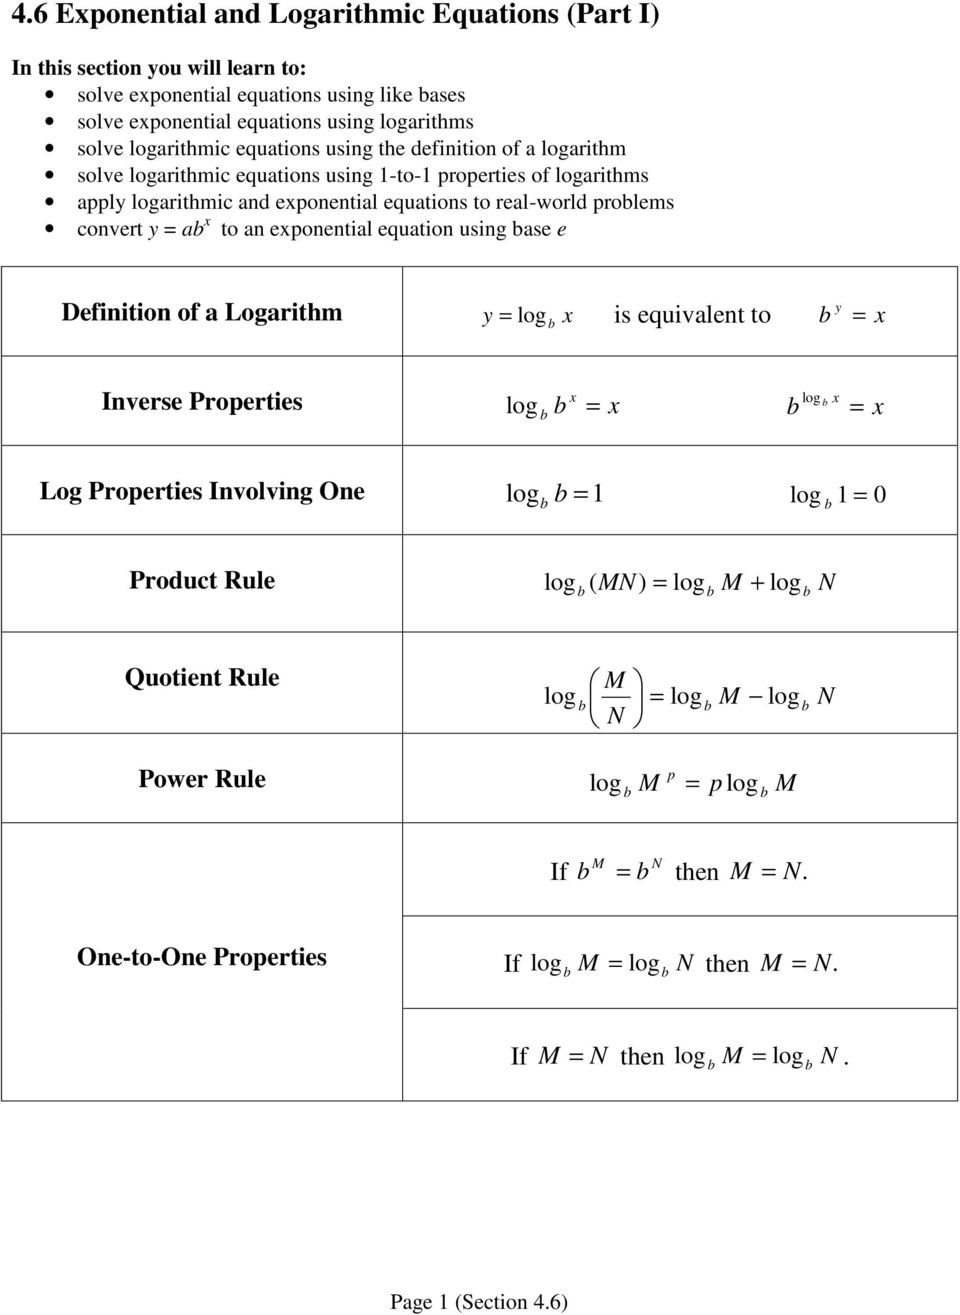 Solving Logarithmic Equations Worksheet 4 6 Exponential and Logarithmic Equations Part I Pdf